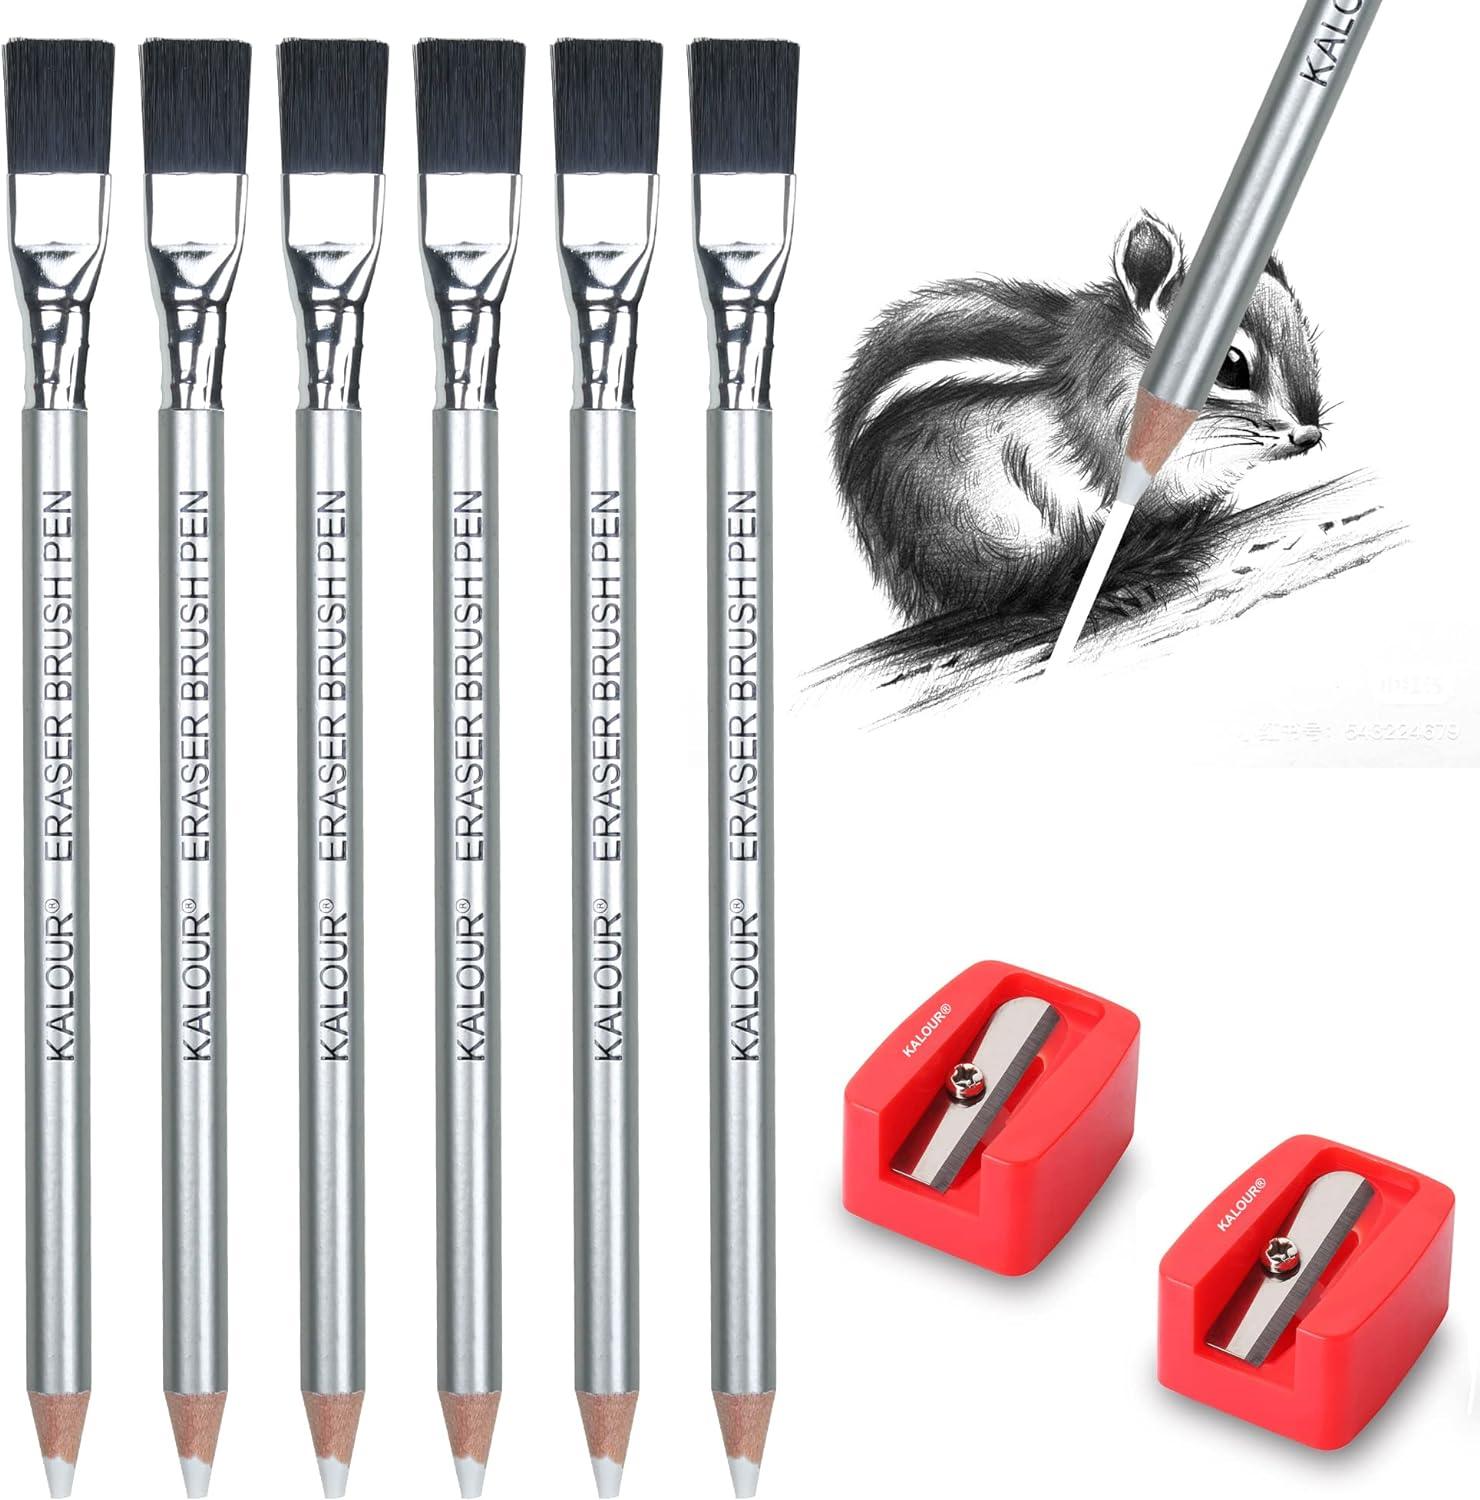 kalour eraser pencils set - 6pc eraser pencils with brush and 2pc sharpener  kalour b0bhykjfpx